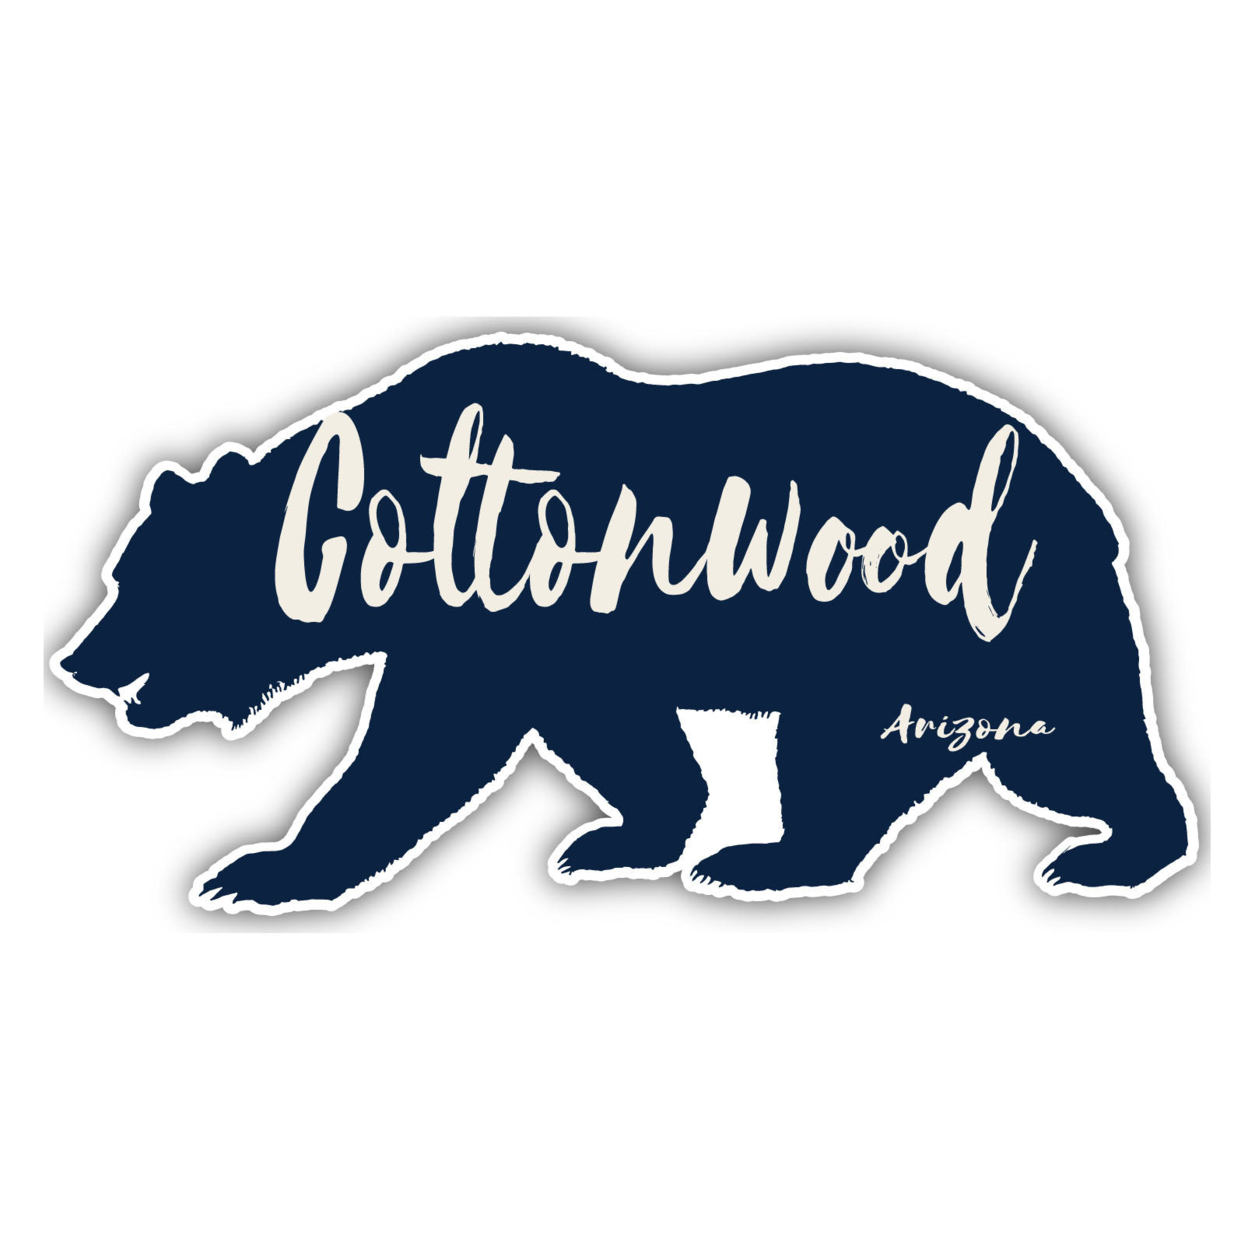 Cottonwood Arizona Souvenir Decorative Stickers (Choose Theme And Size) - 4-Pack, 6-Inch, Camp Life